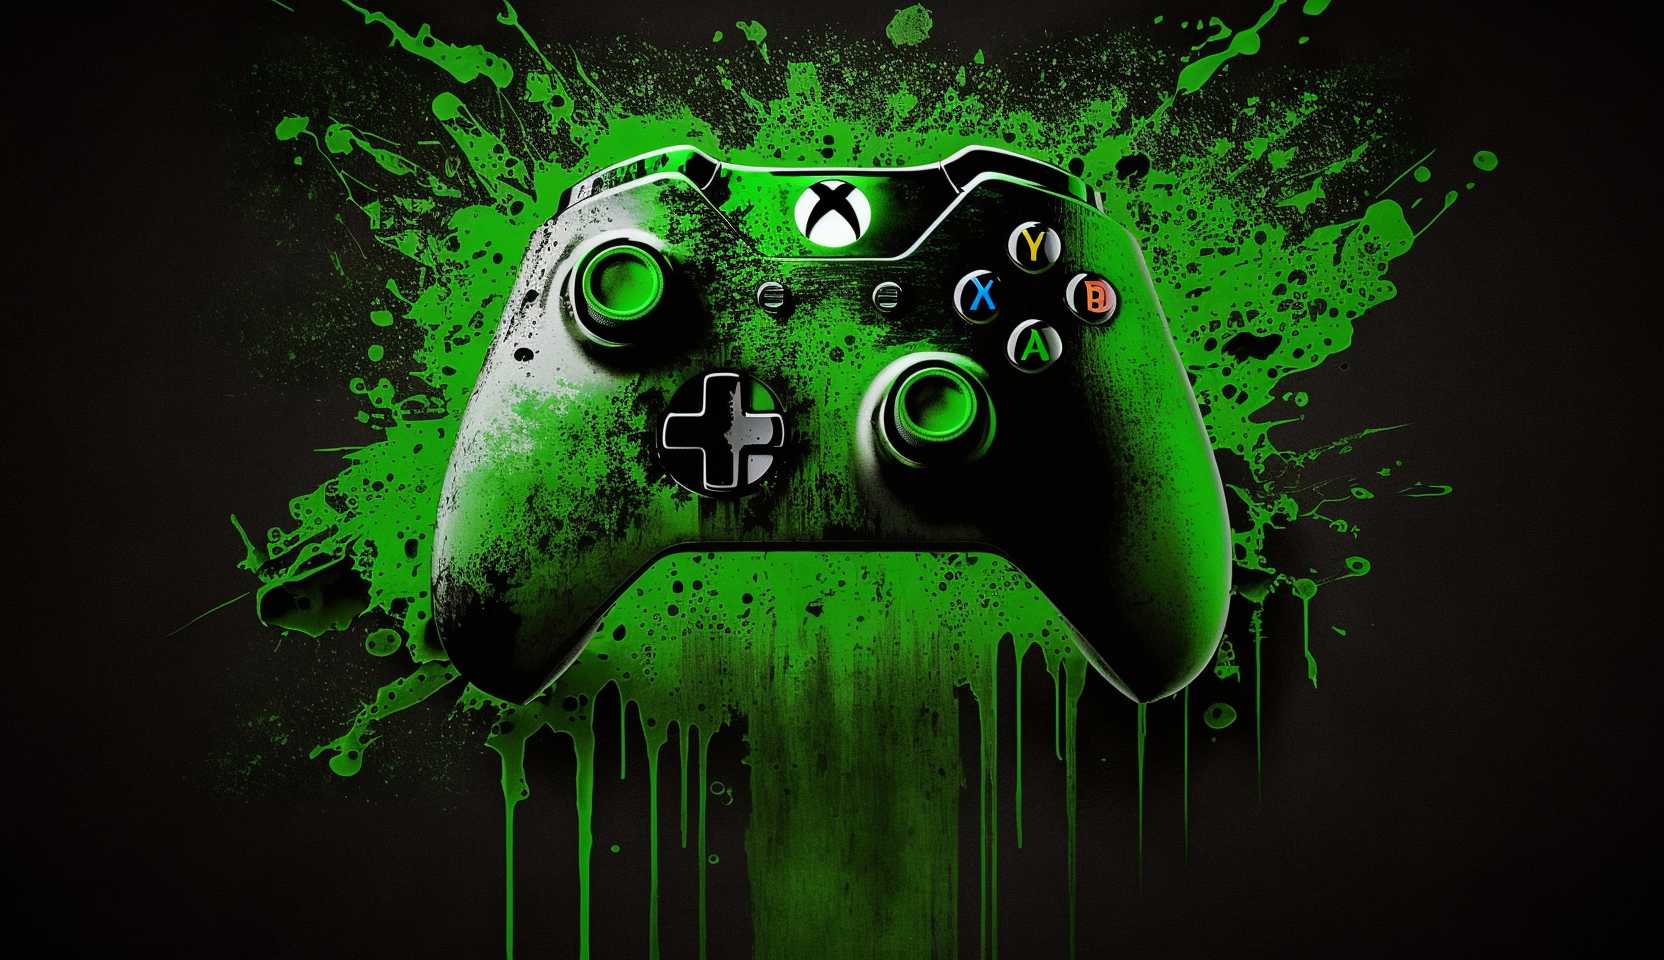 Xbox Gamertag Generator Image